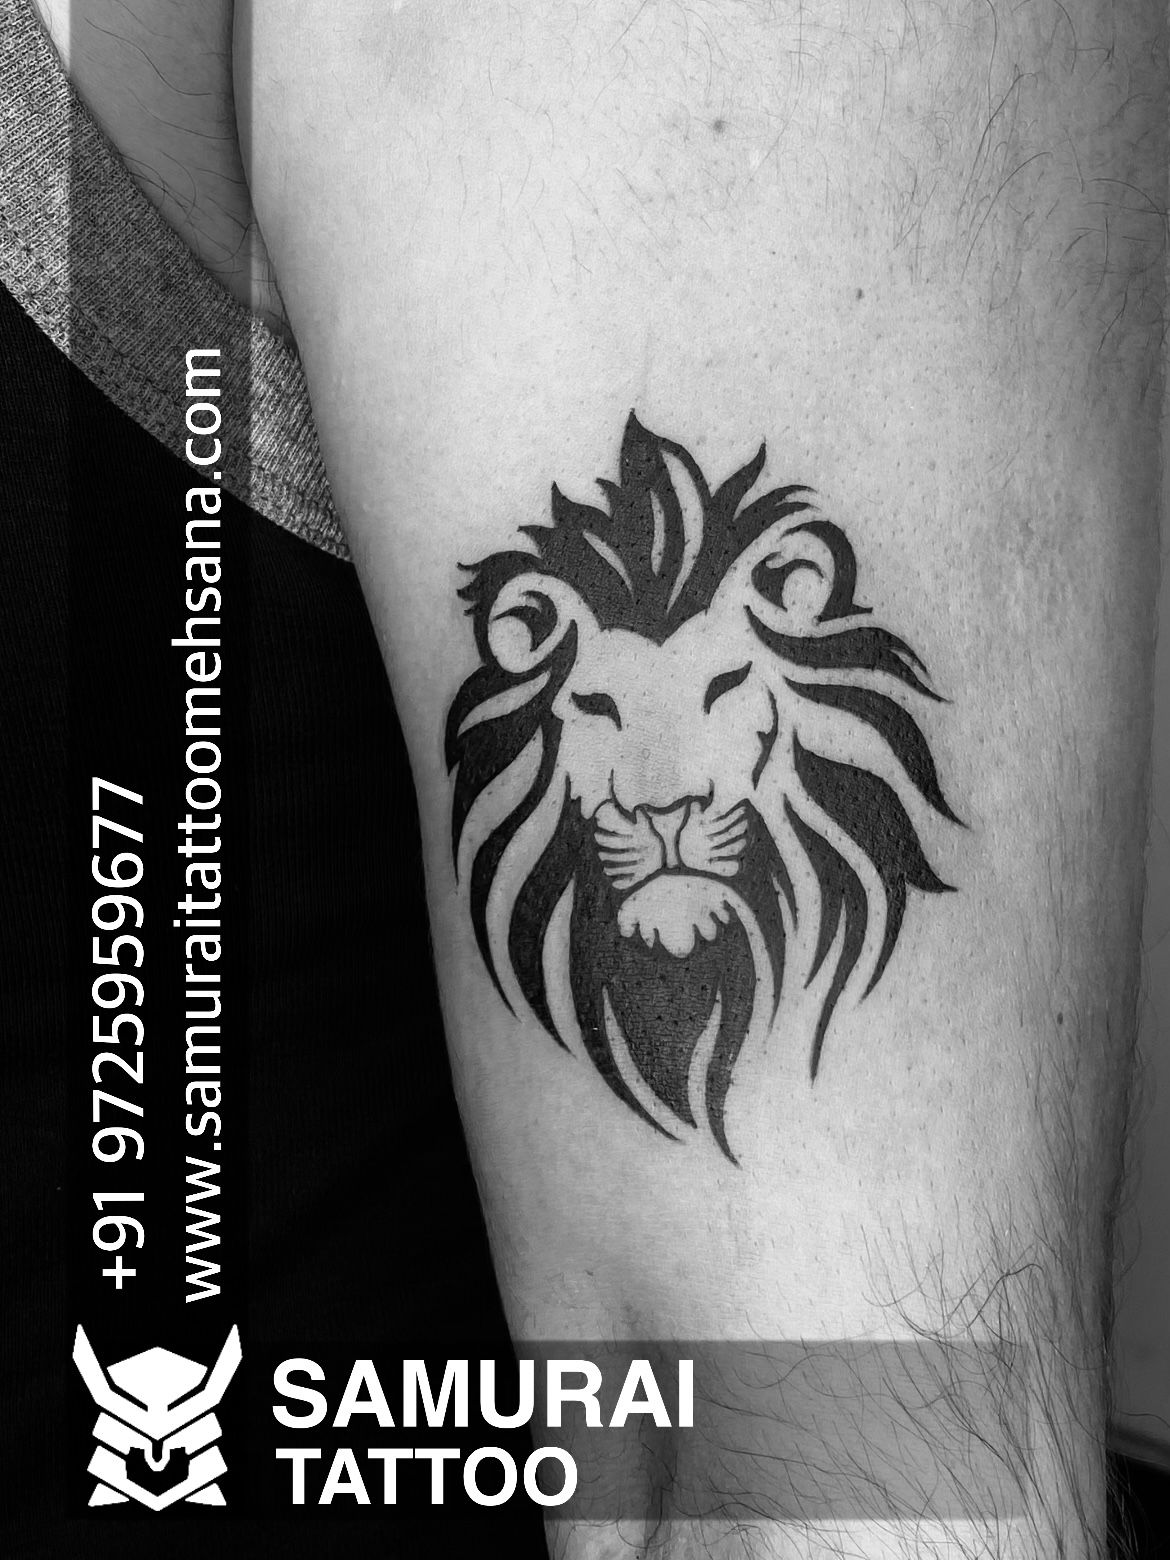 Temporary Tattoo Sticker Tiger Lion Wolf Pattern Decal Body Art Arm Leg  Decor | eBay